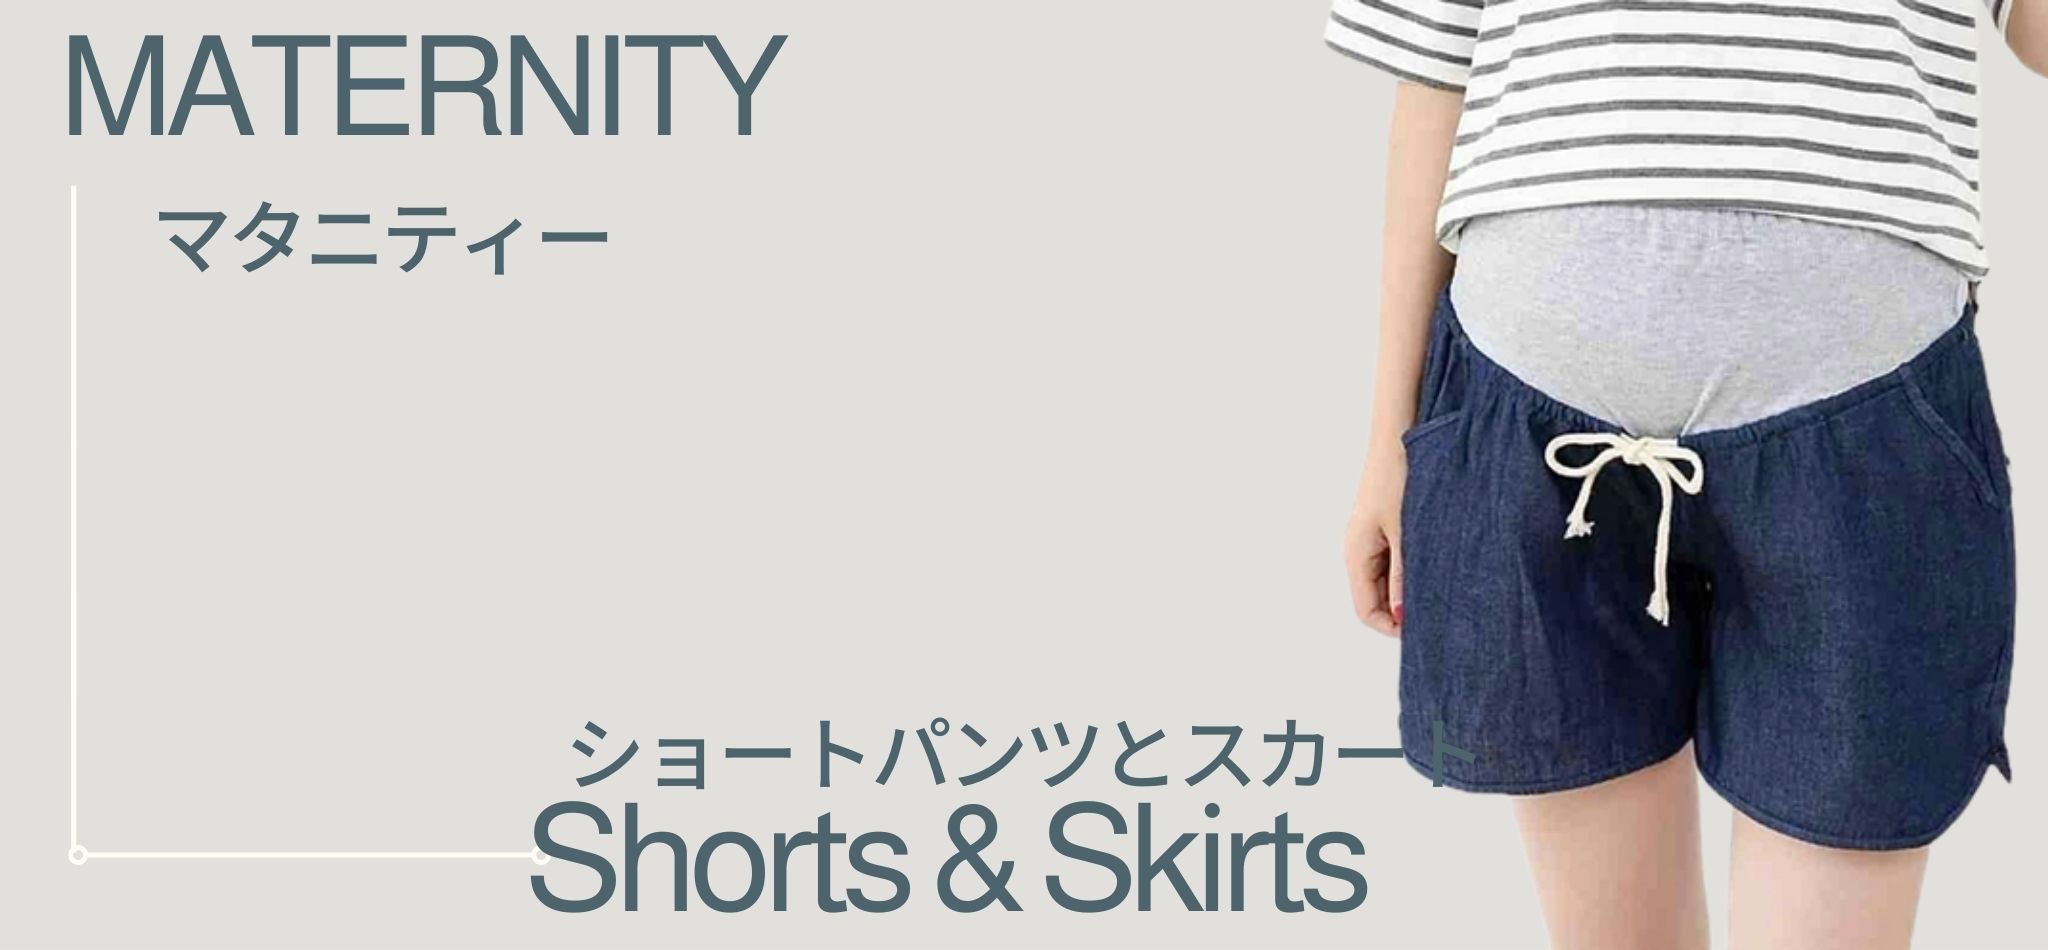 Maternity Shorts and Skirts | miteigi 